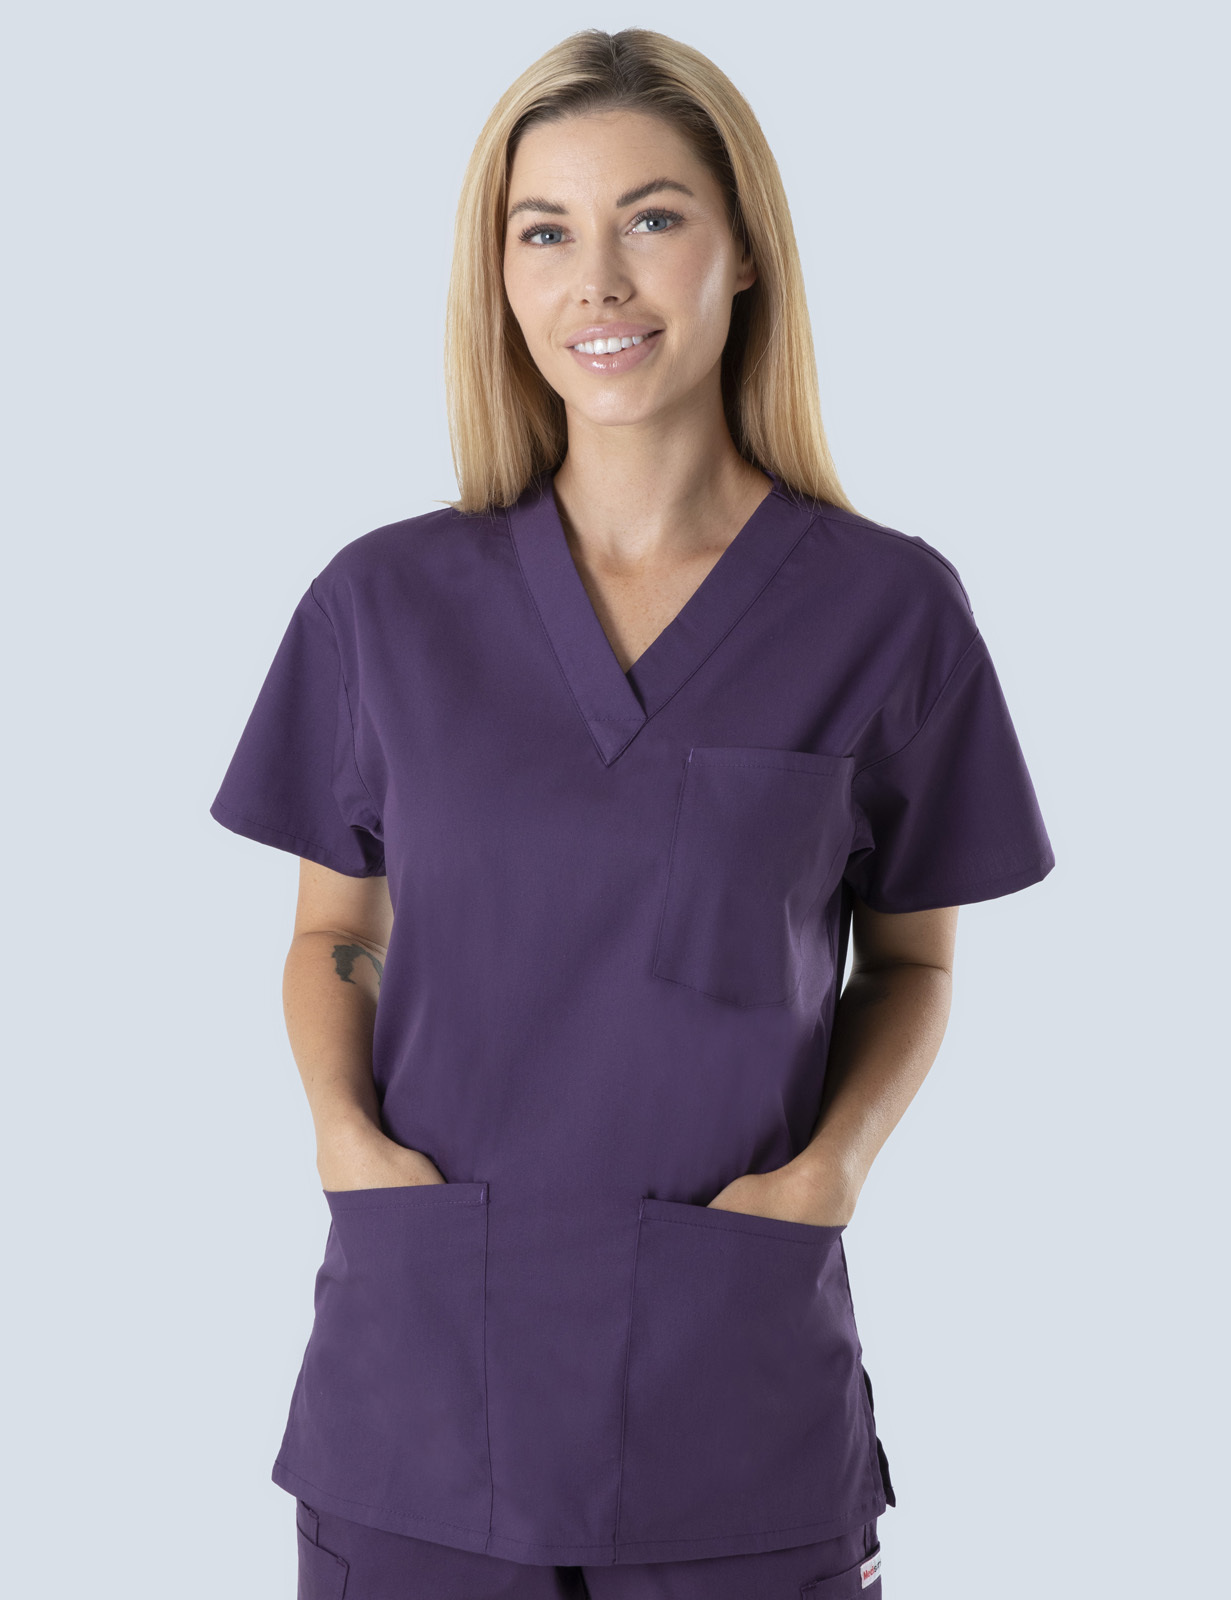 Queensland Children's Hospital Emergency Department Enrolled Nurse Uniform Top Bundle  (4 Pocket Top  in Aubergine incl Logos)